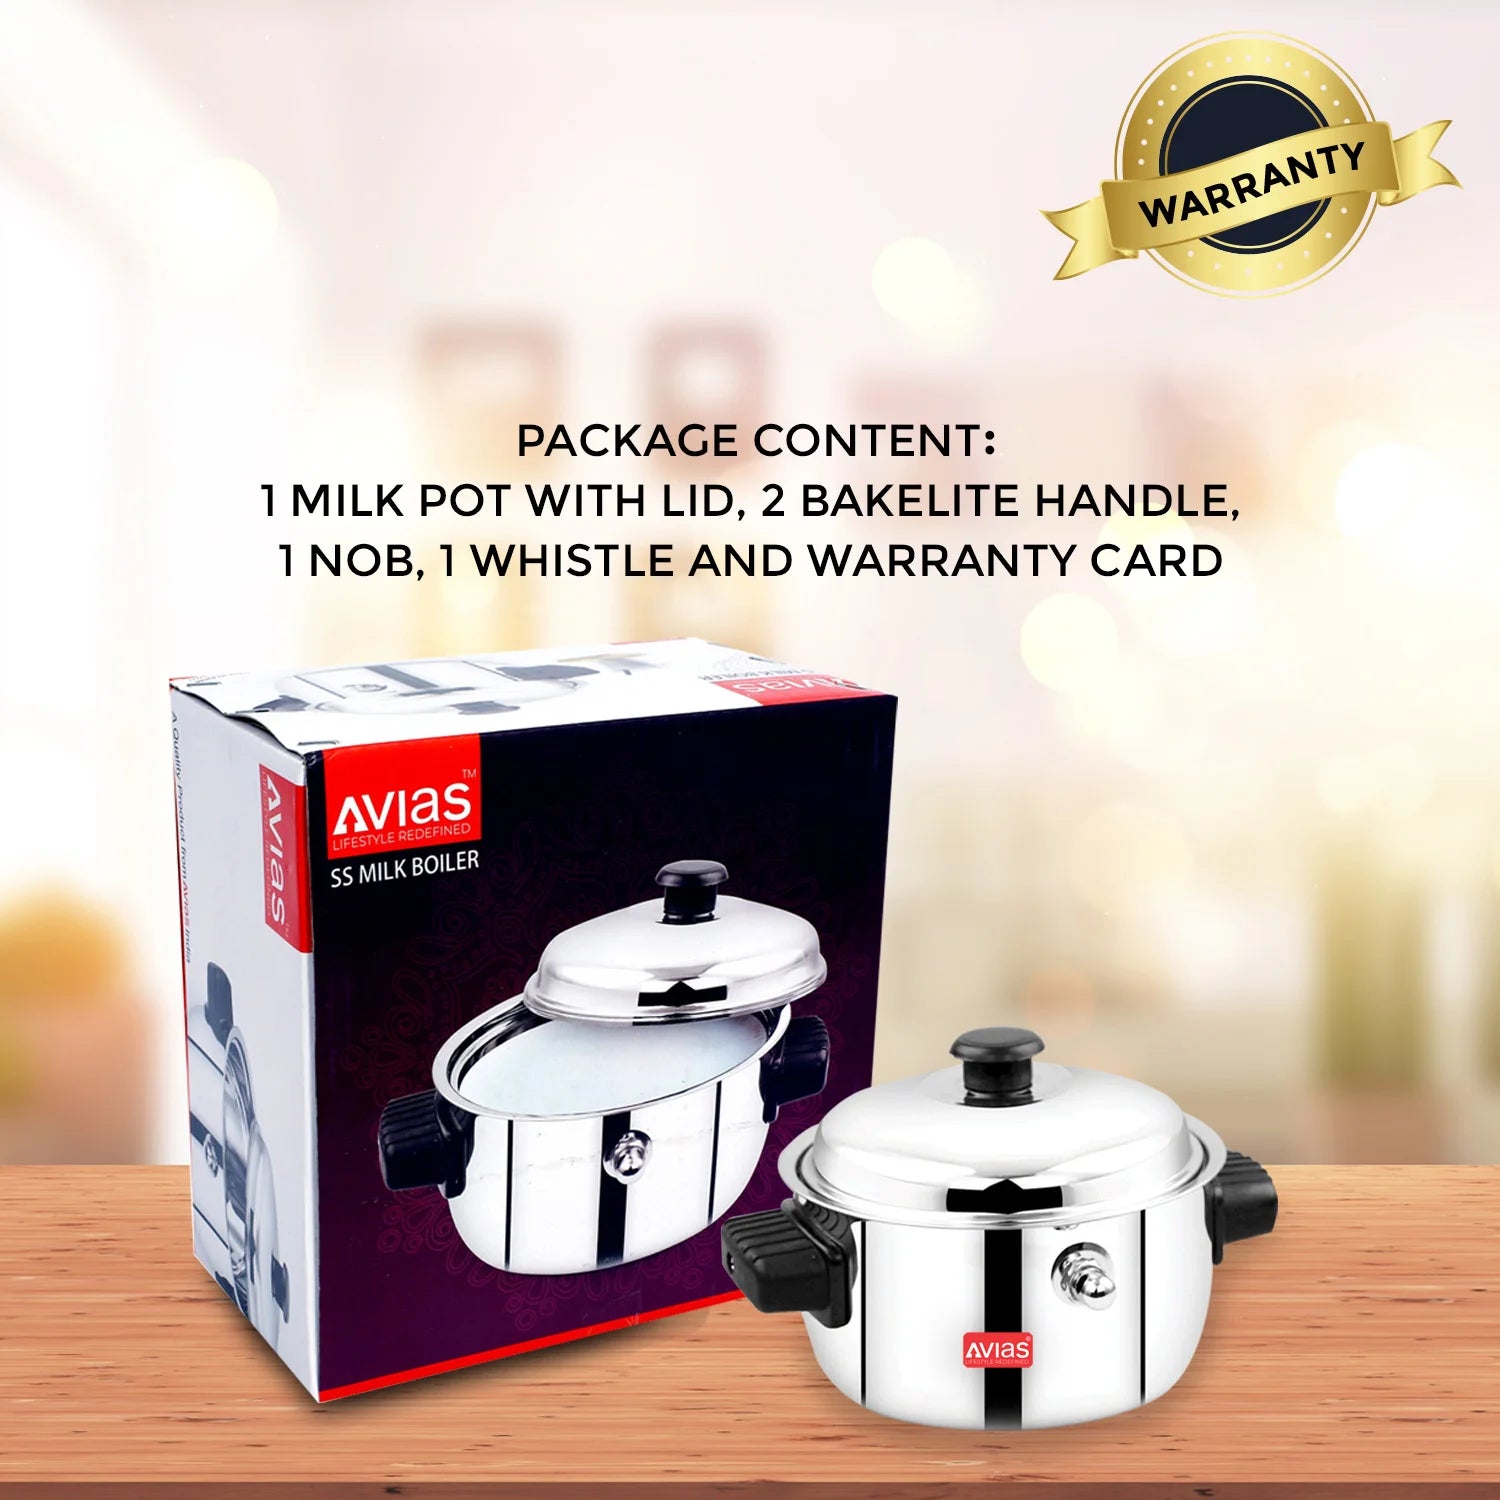 AVIAS Stainless Steel Milk Boiler/Milk pot/ Milk Cooker with lid package